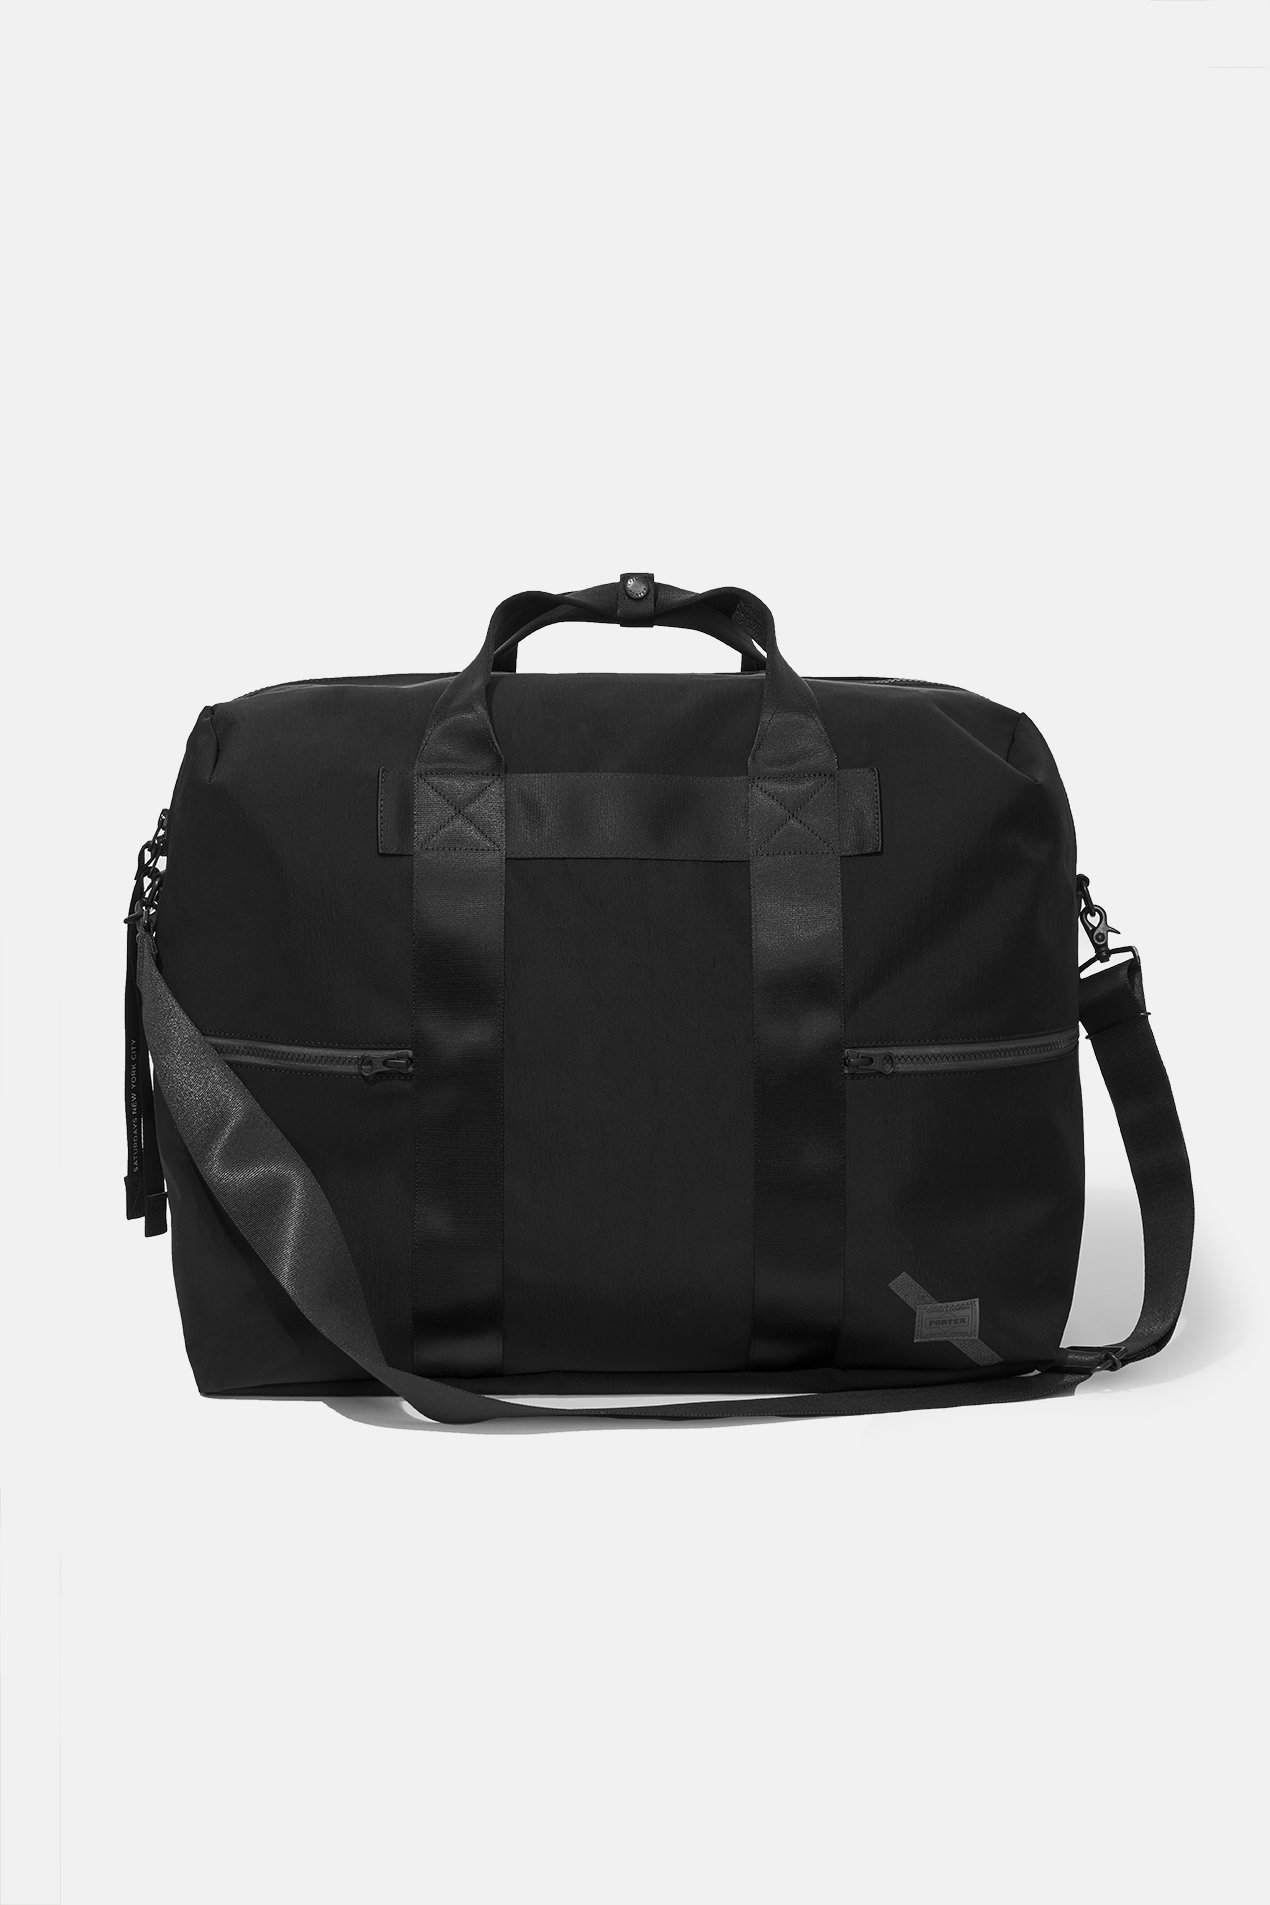 Very Goods | Porter Reflective Weekender Duffle Bag, Black | Saturdays NYC